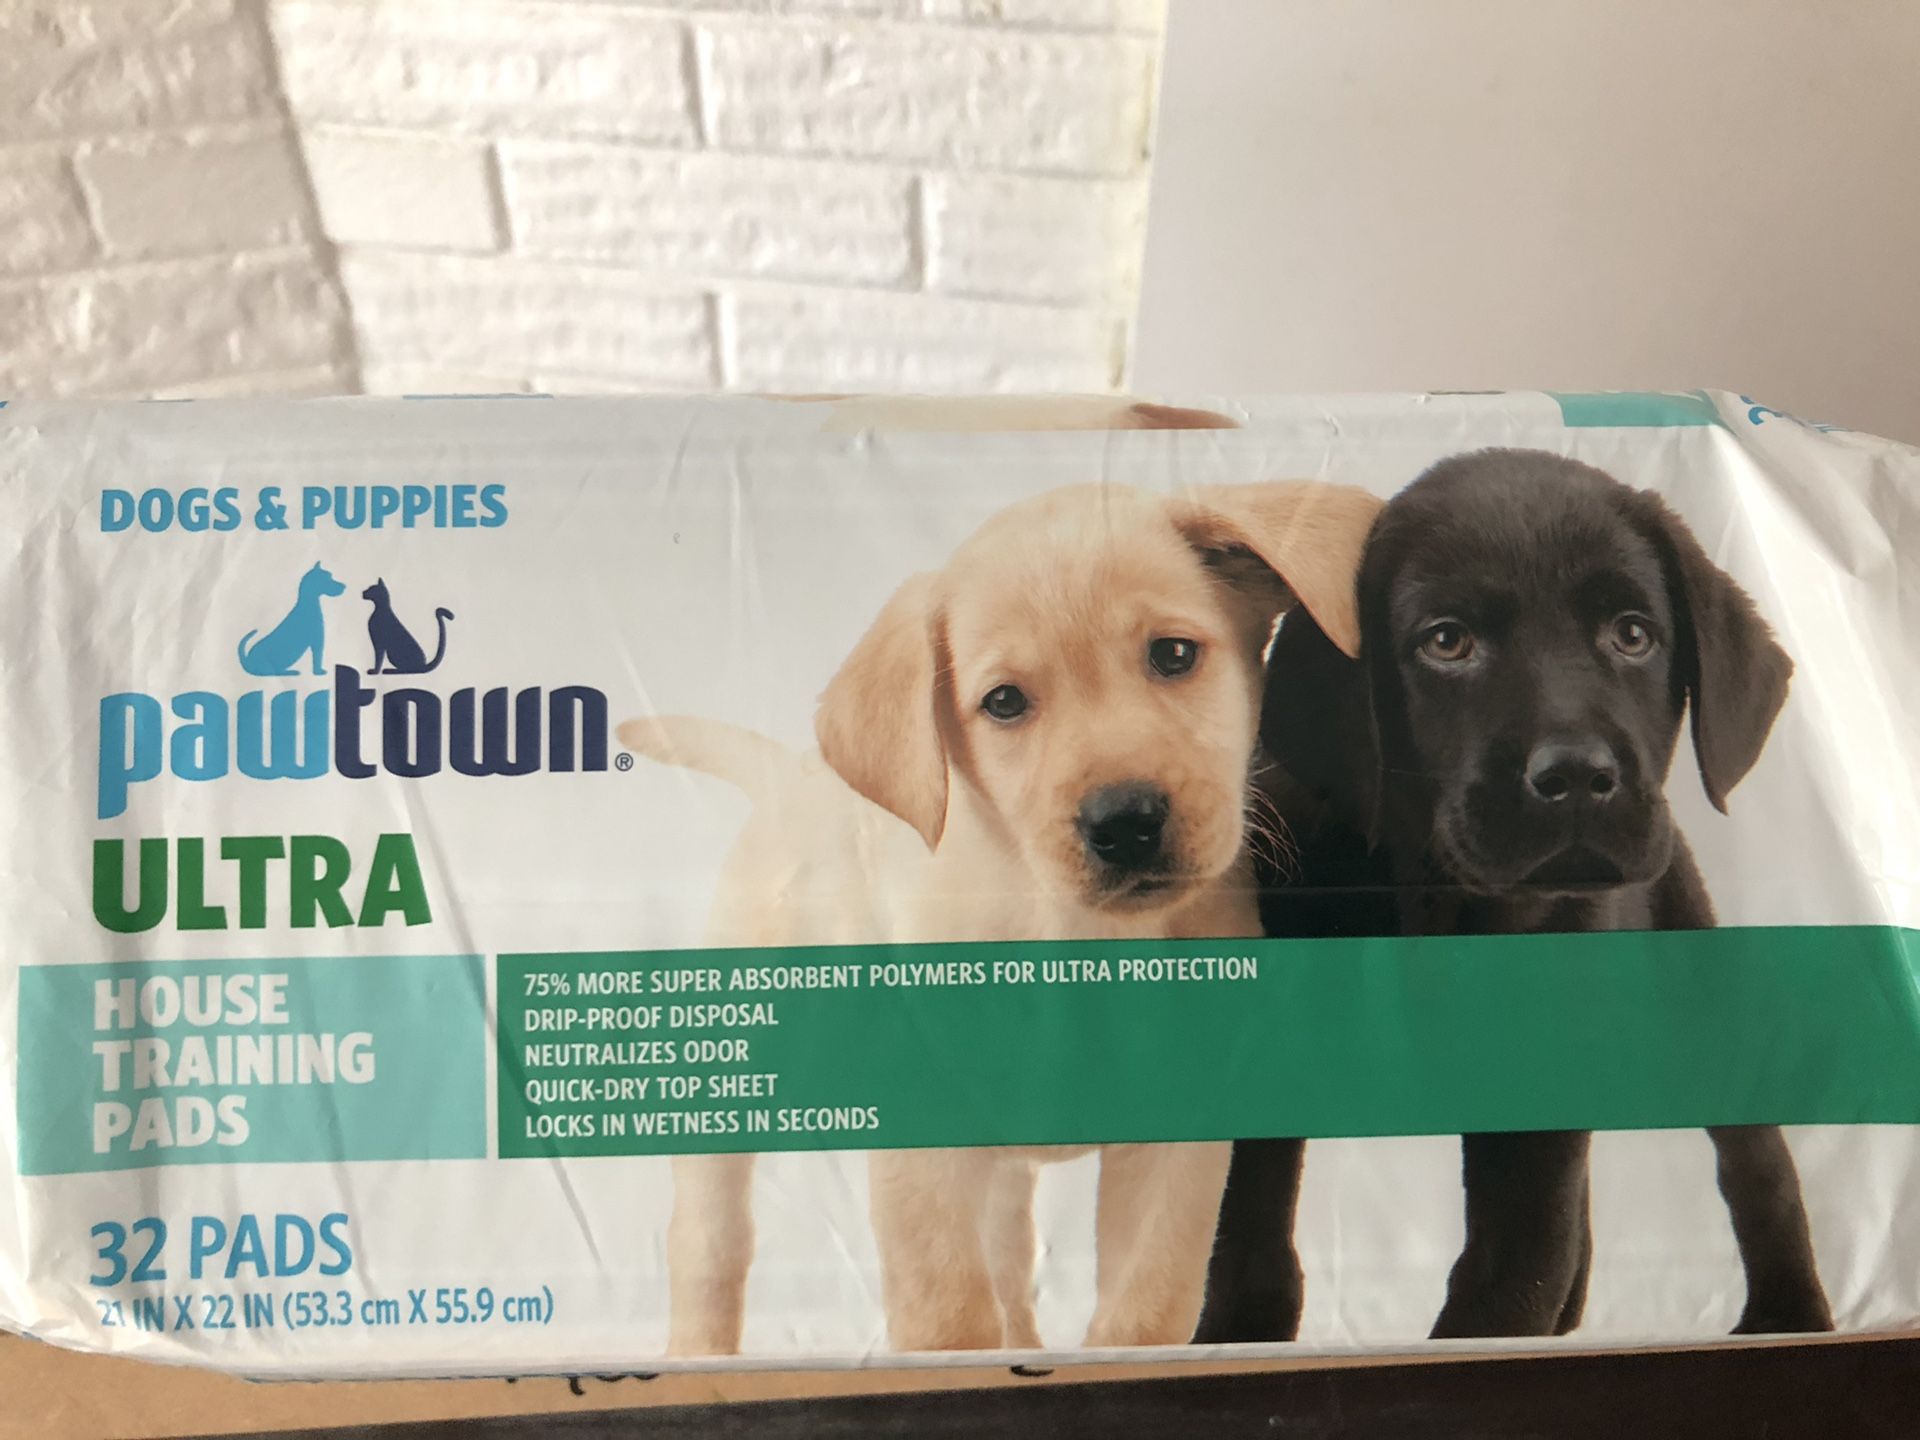 Puppy potty training pads